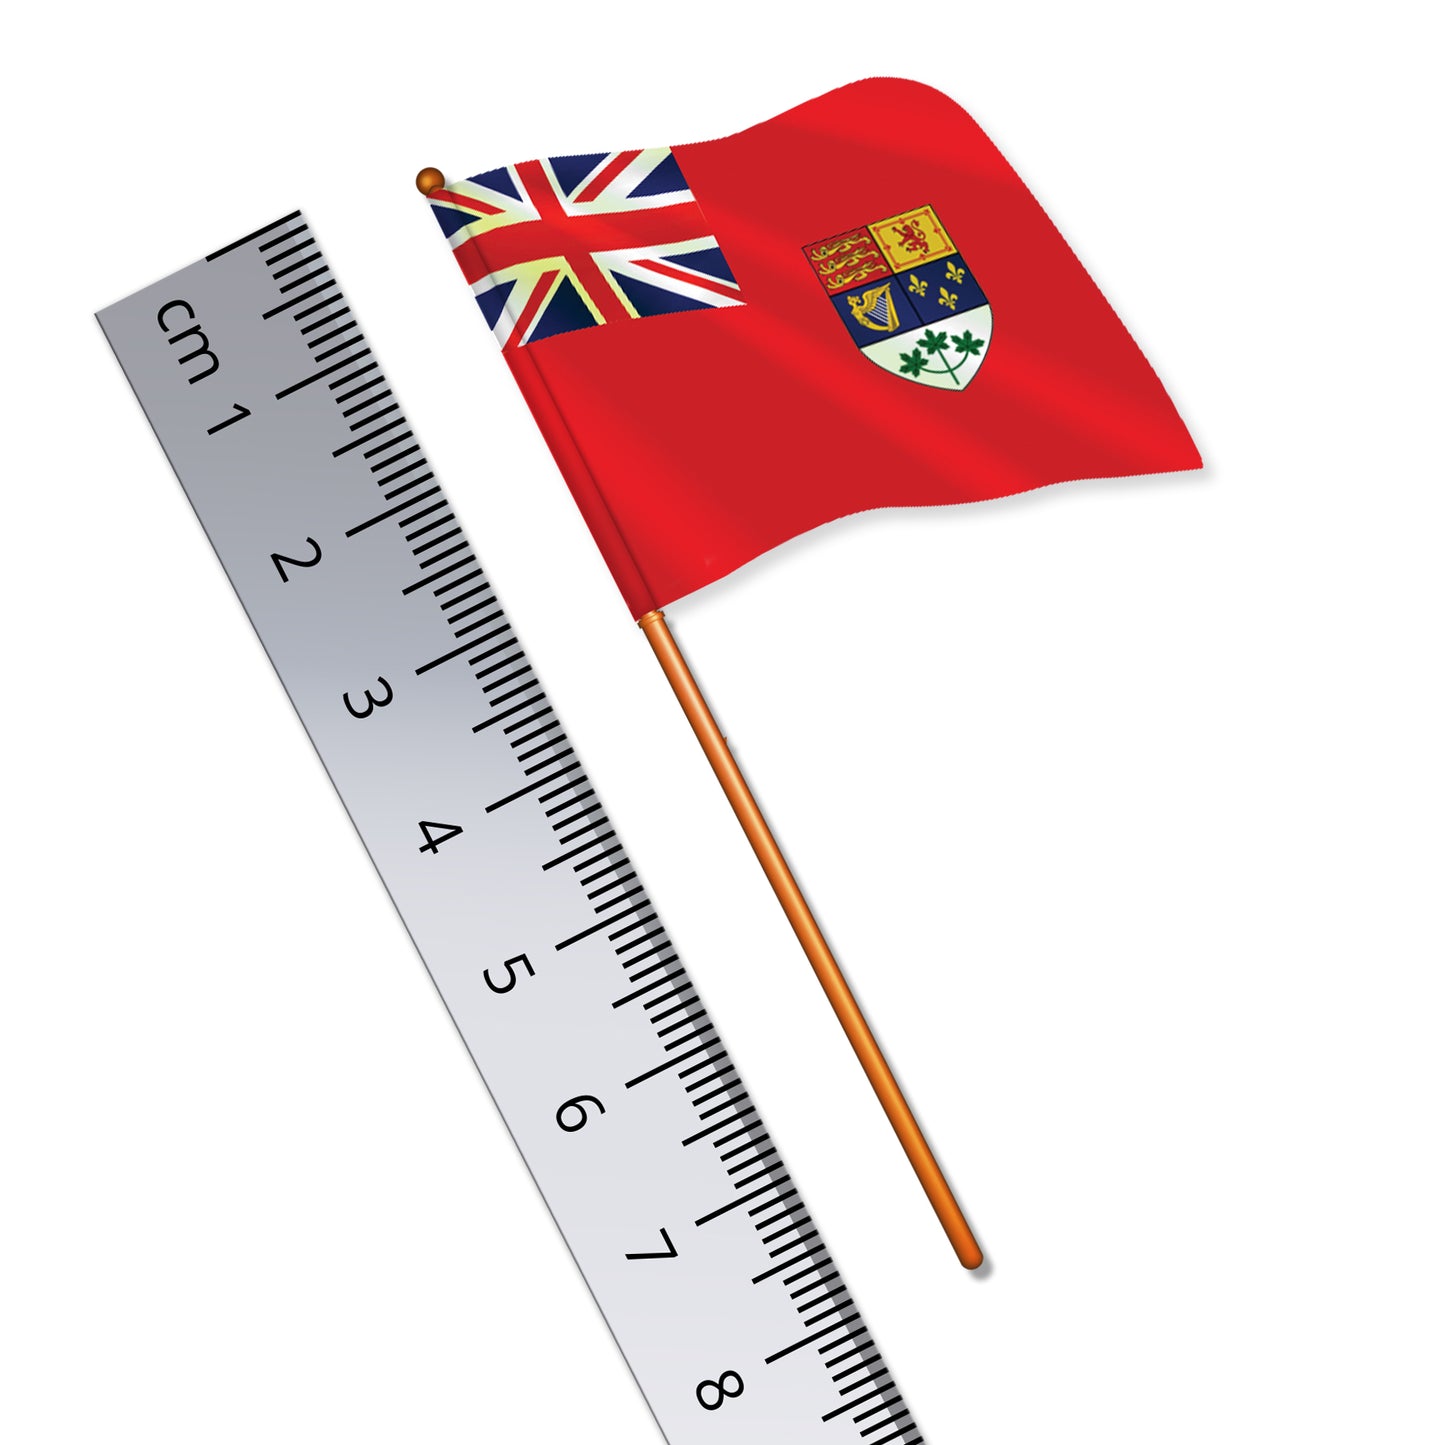 Canada Red Ensign Flag (British Empire, World War II)